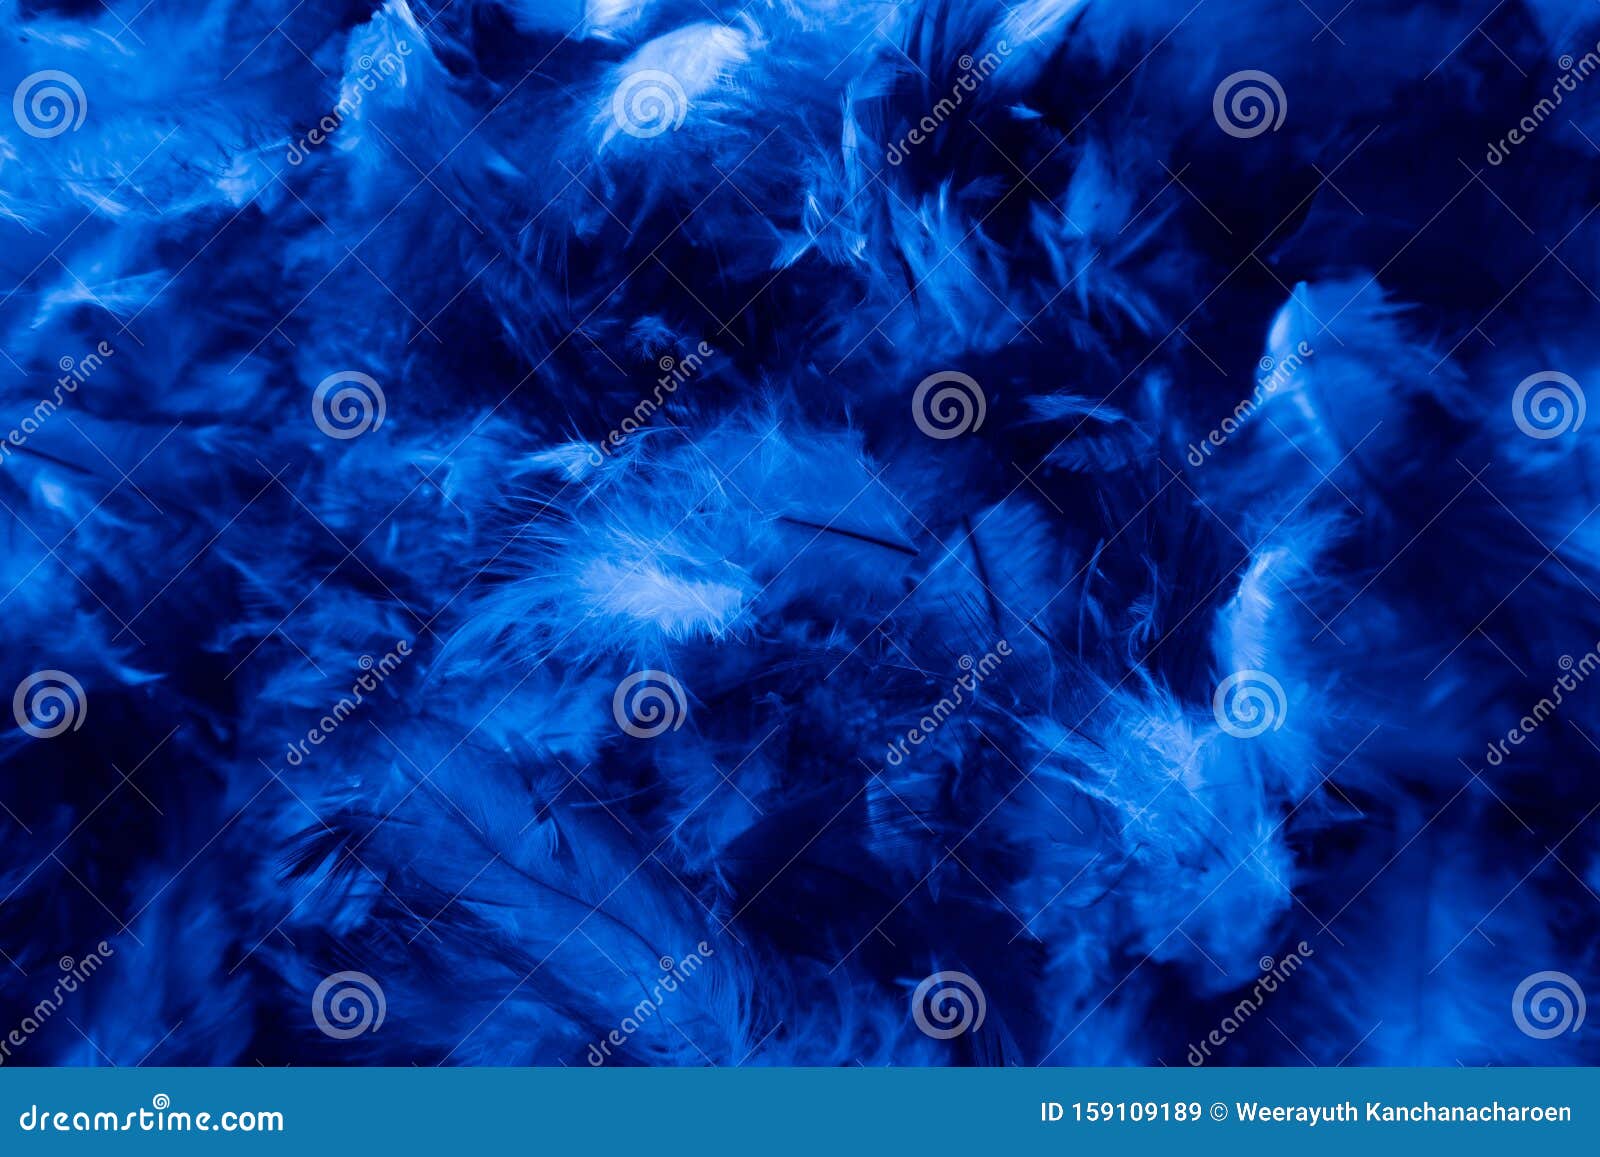 315059 Feather Wallpaper Images Stock Photos  Vectors  Shutterstock